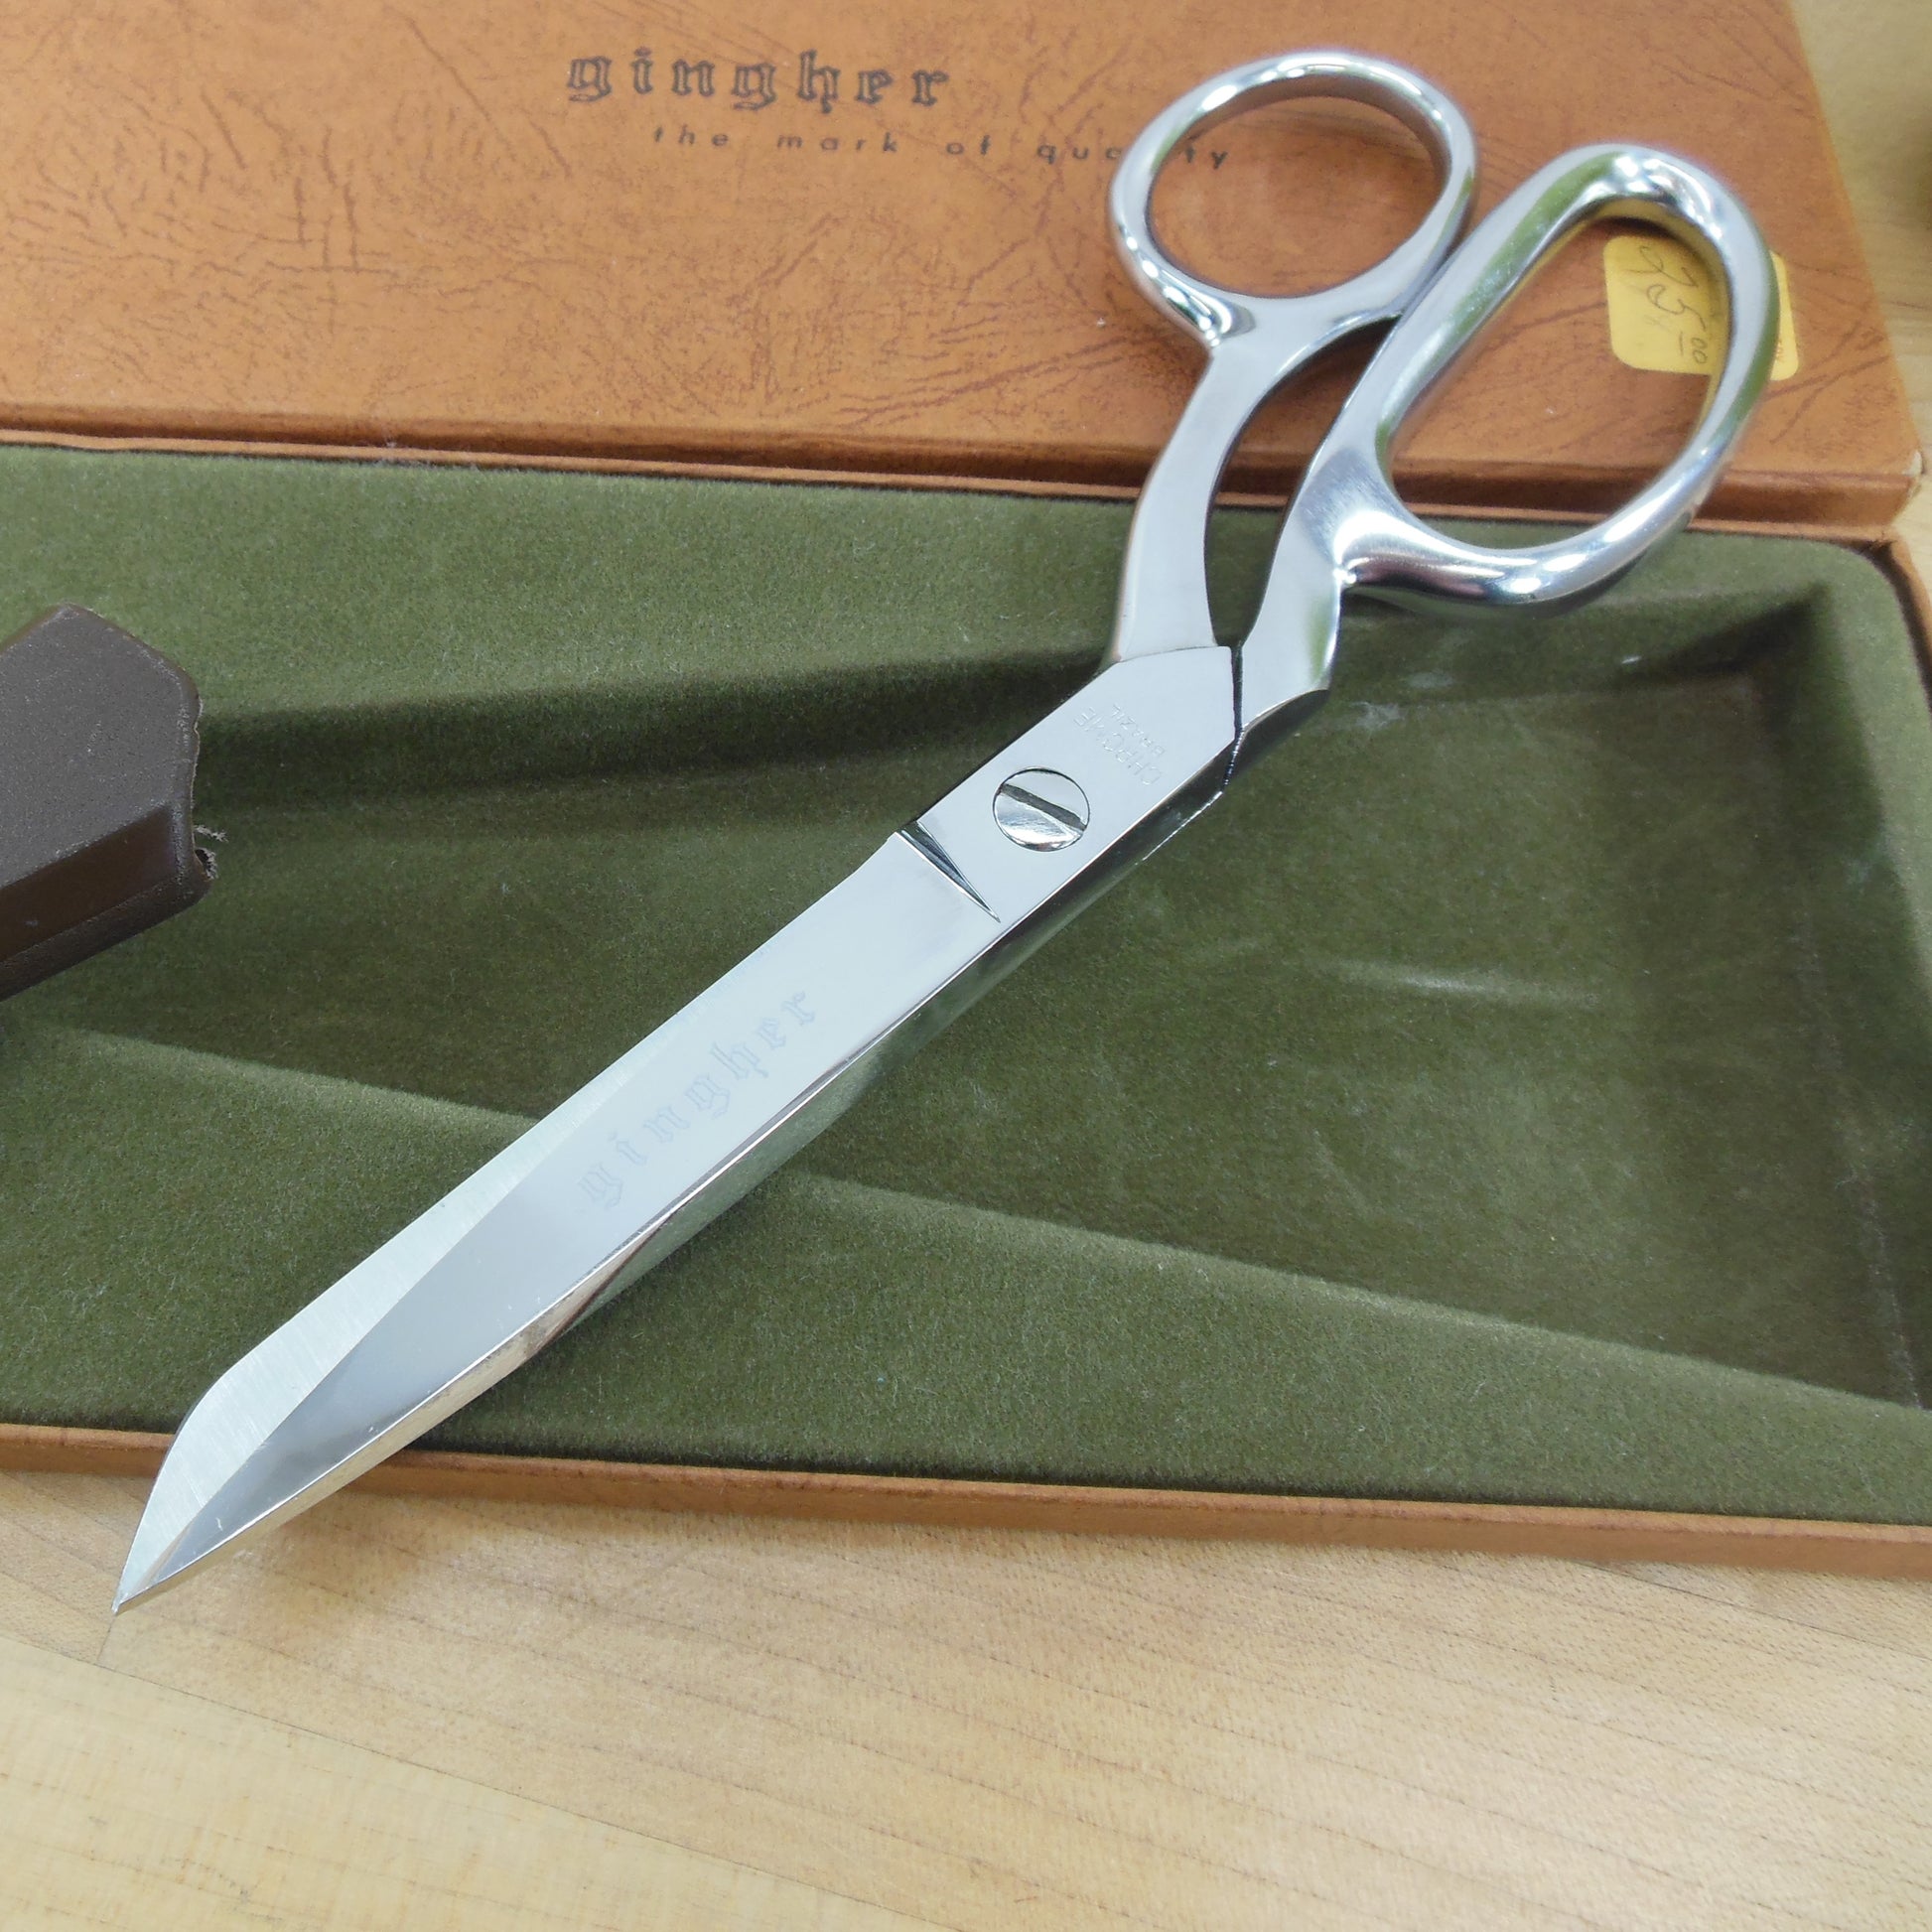 Gingher G-8 Knife Edge Scissors Shears In Box Vintage